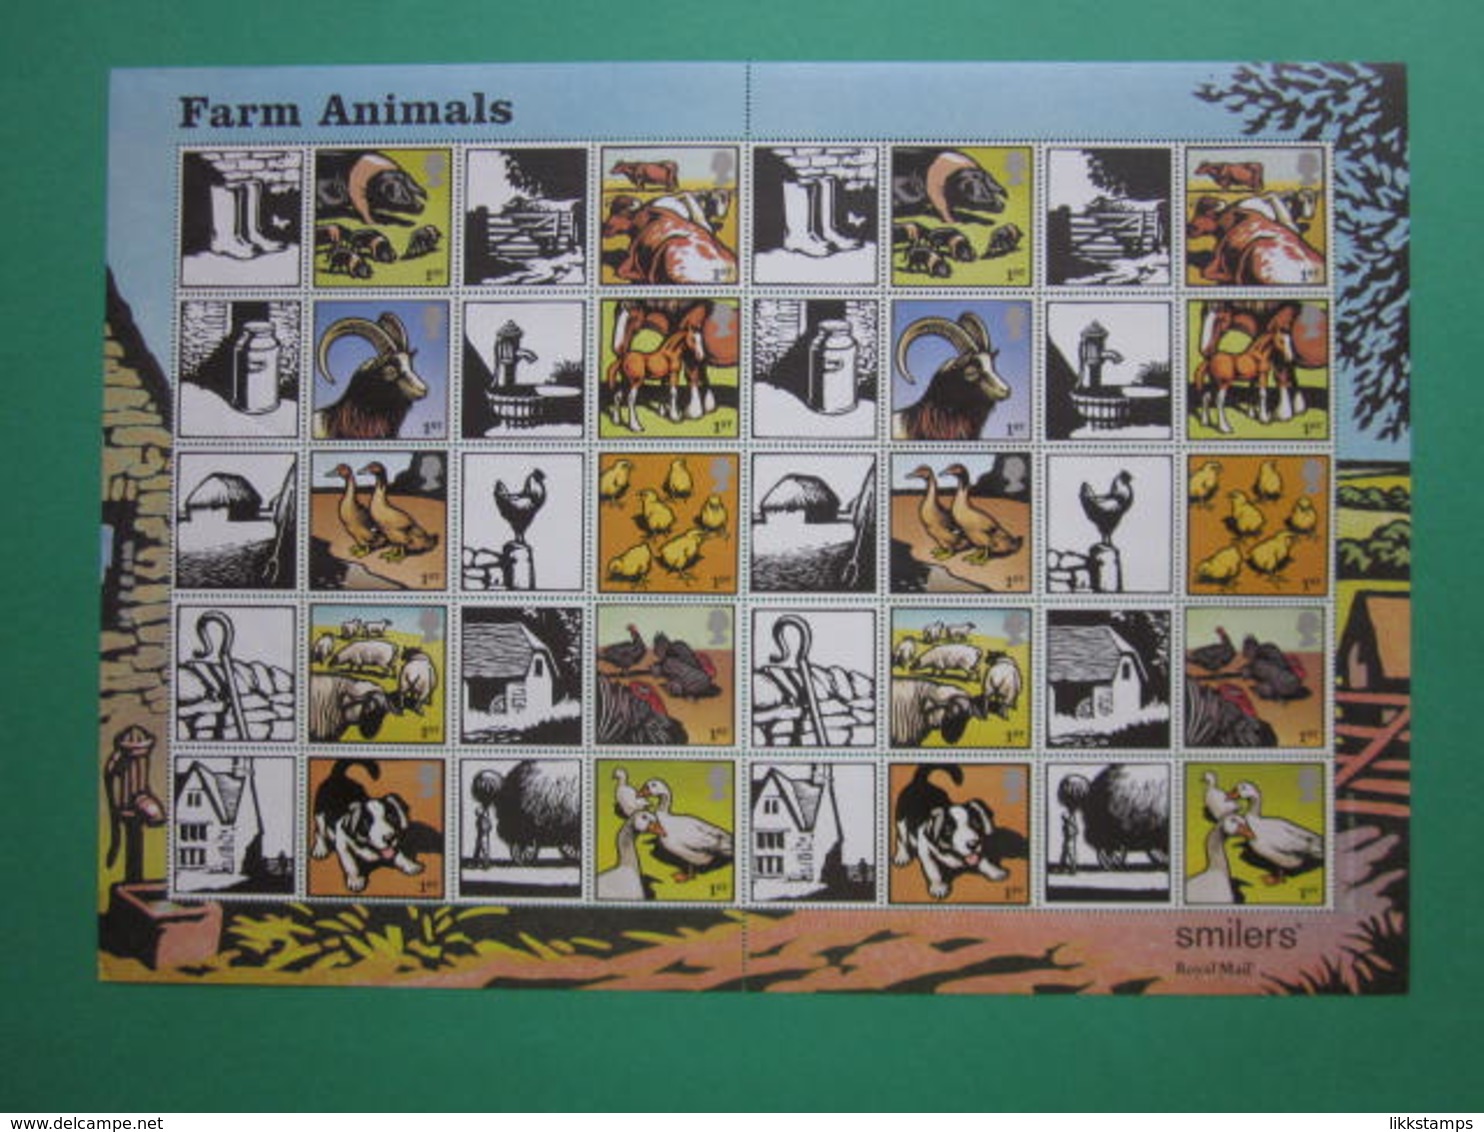 2005 ROYAL MAIL FARM ANIMALS GENERIC SMILERS SHEET. #SS0023 - Smilers Sheets